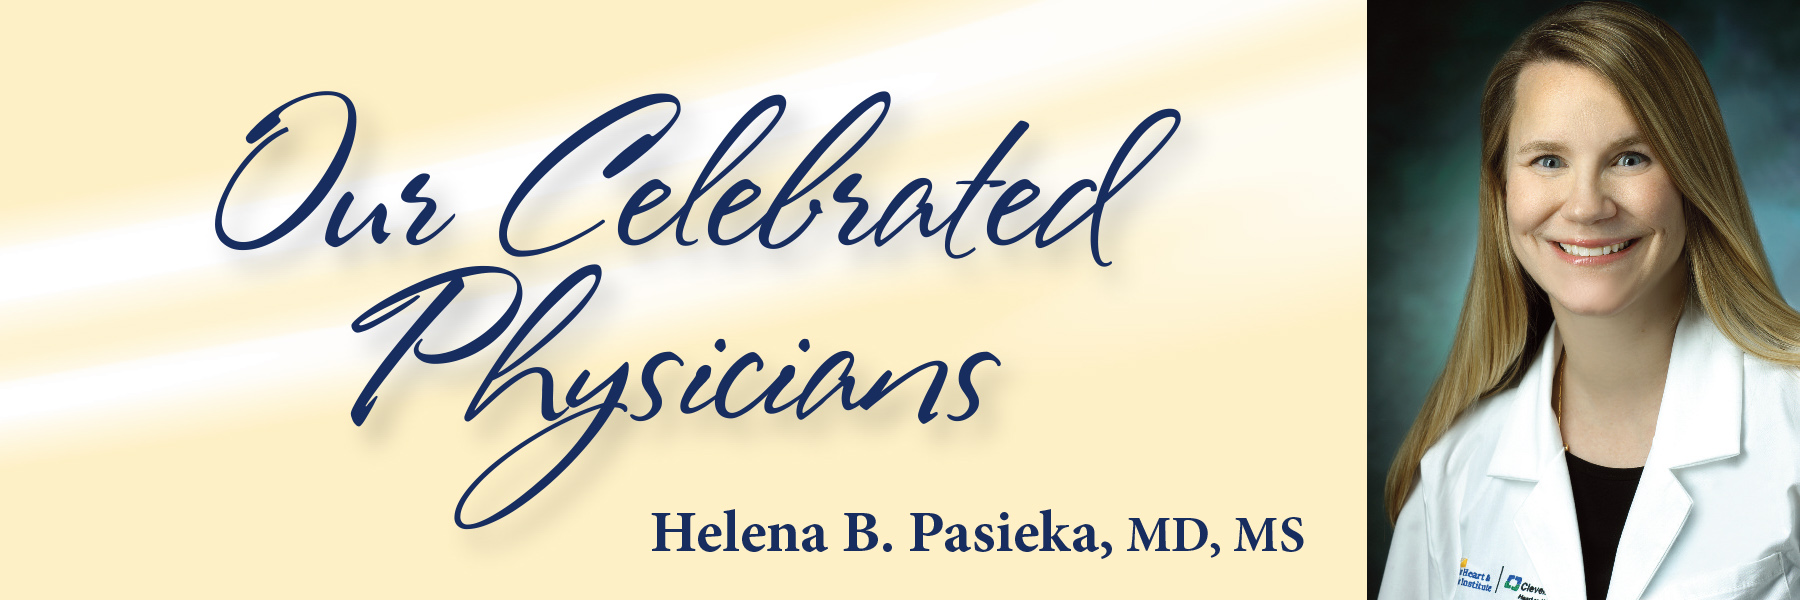 Celebrated-Physician-BLOG_Pasieka-Helena